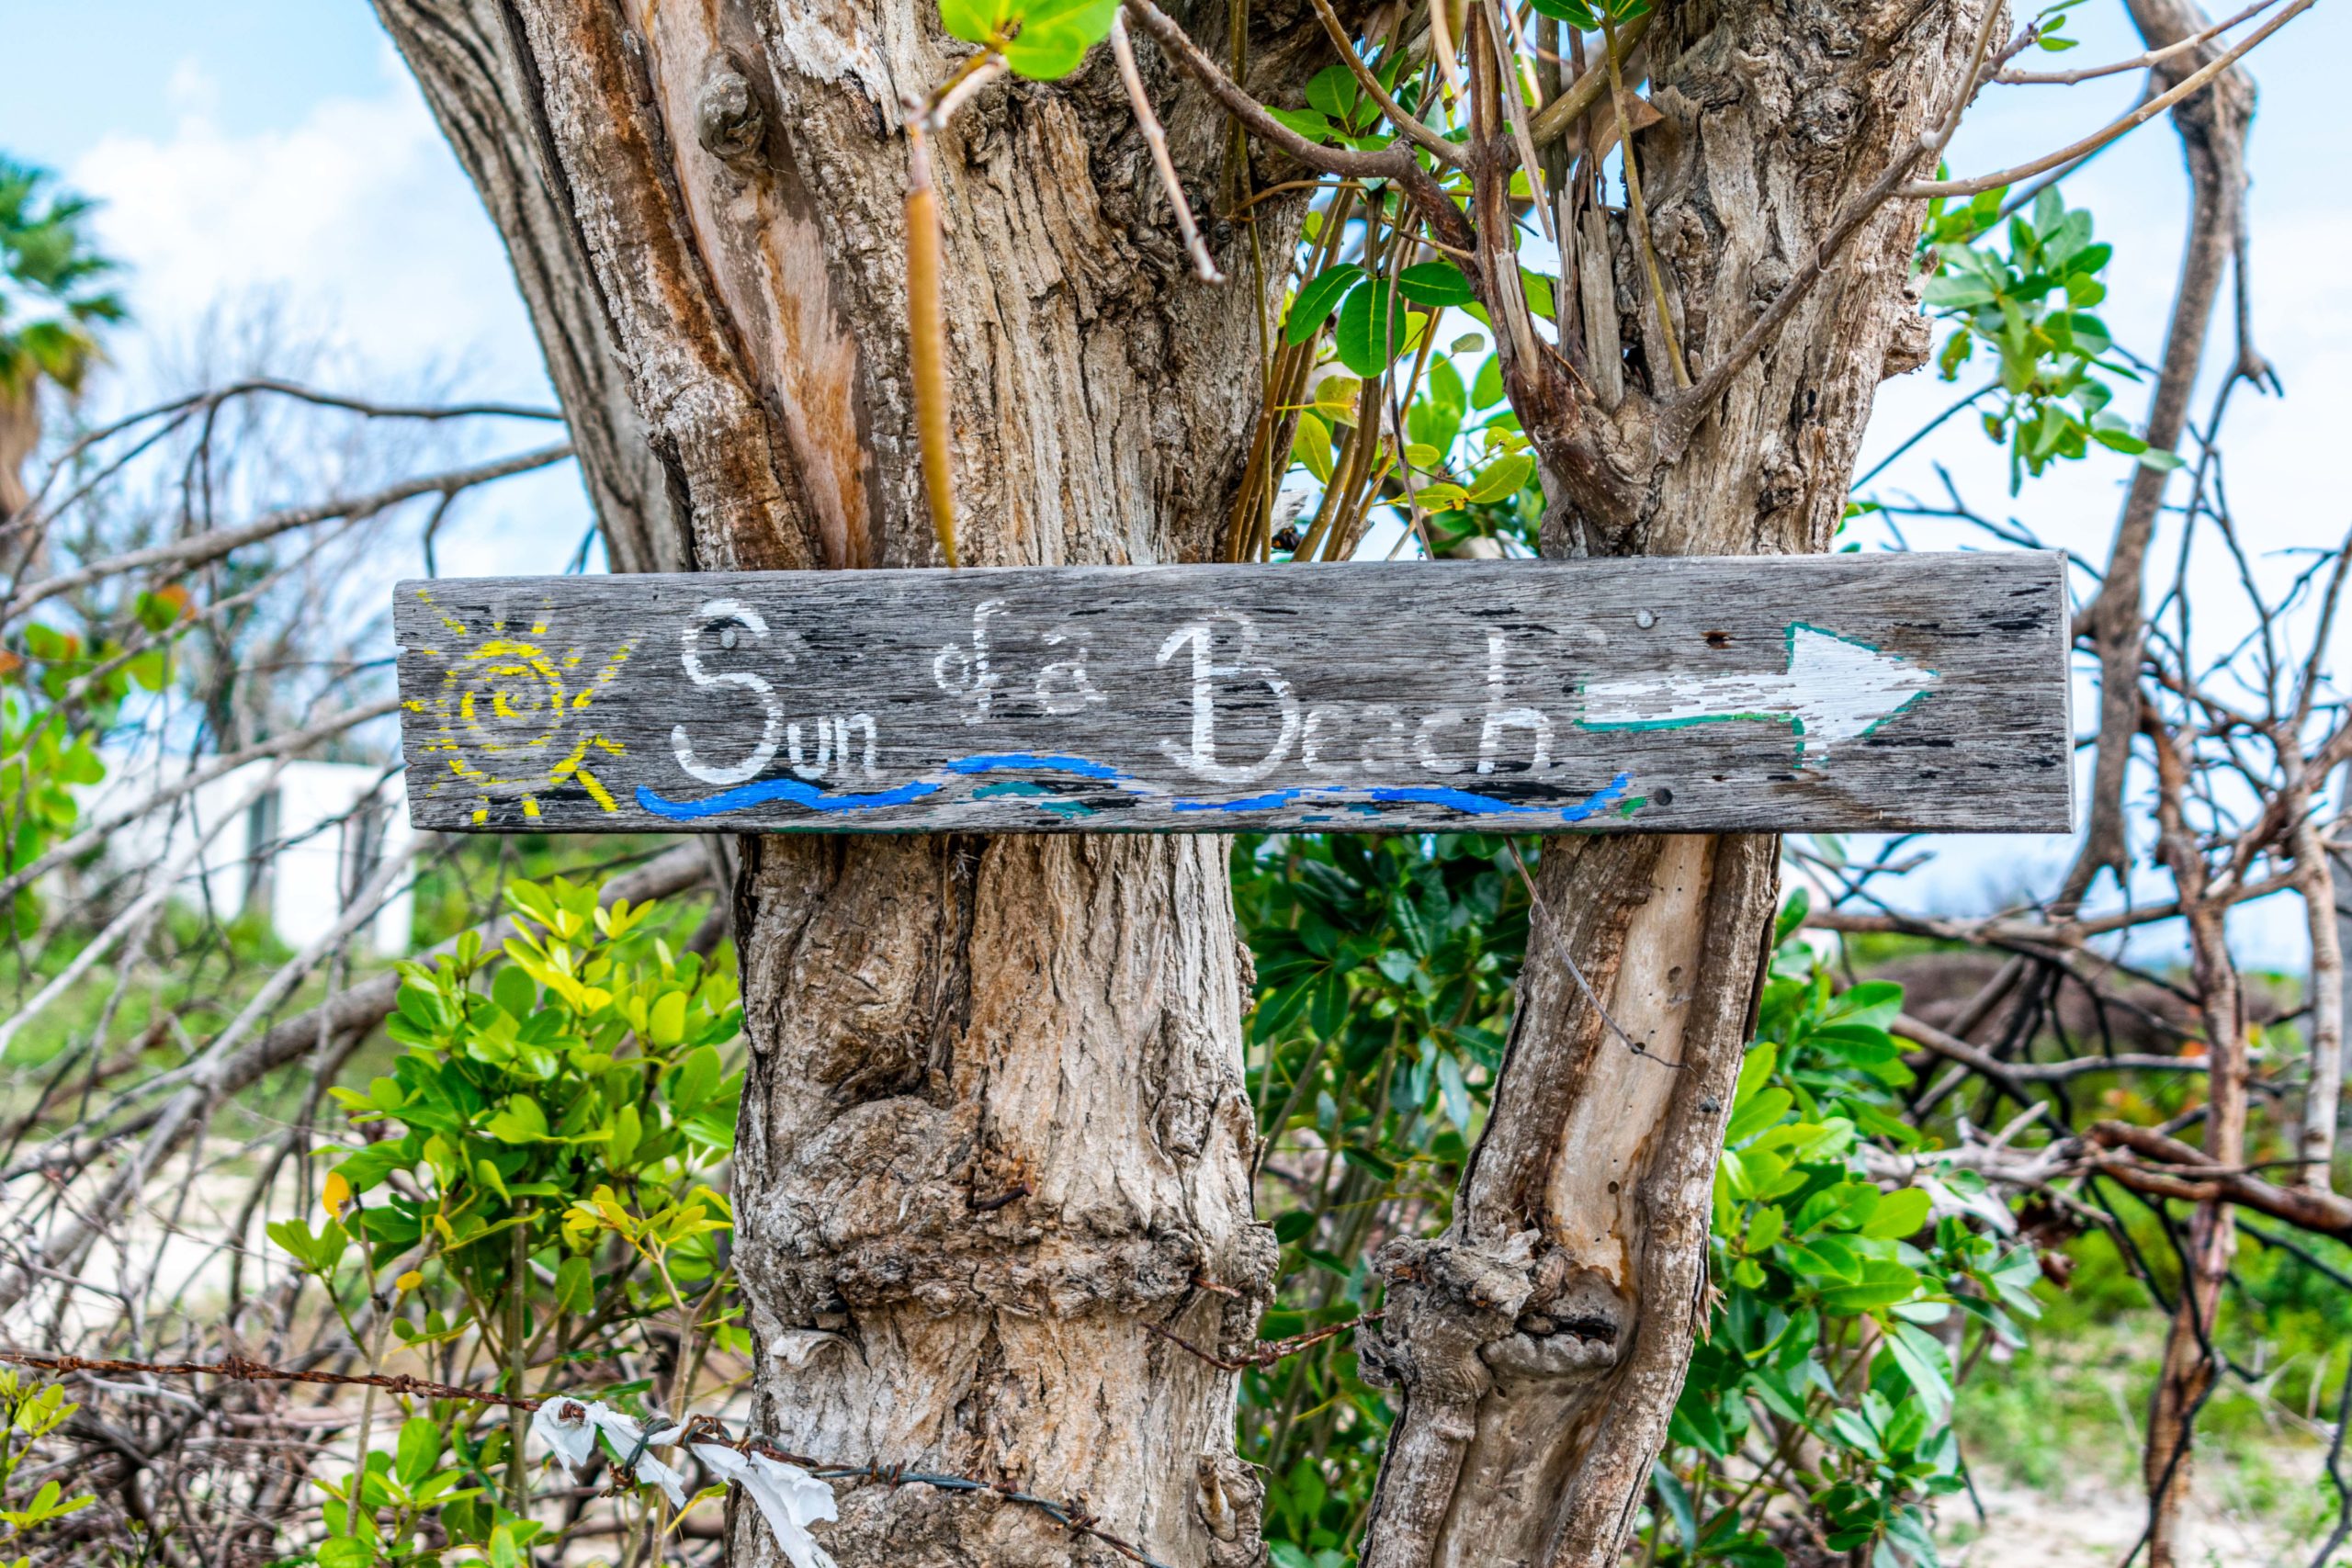 Sun Of A Beach sign, Barbuda